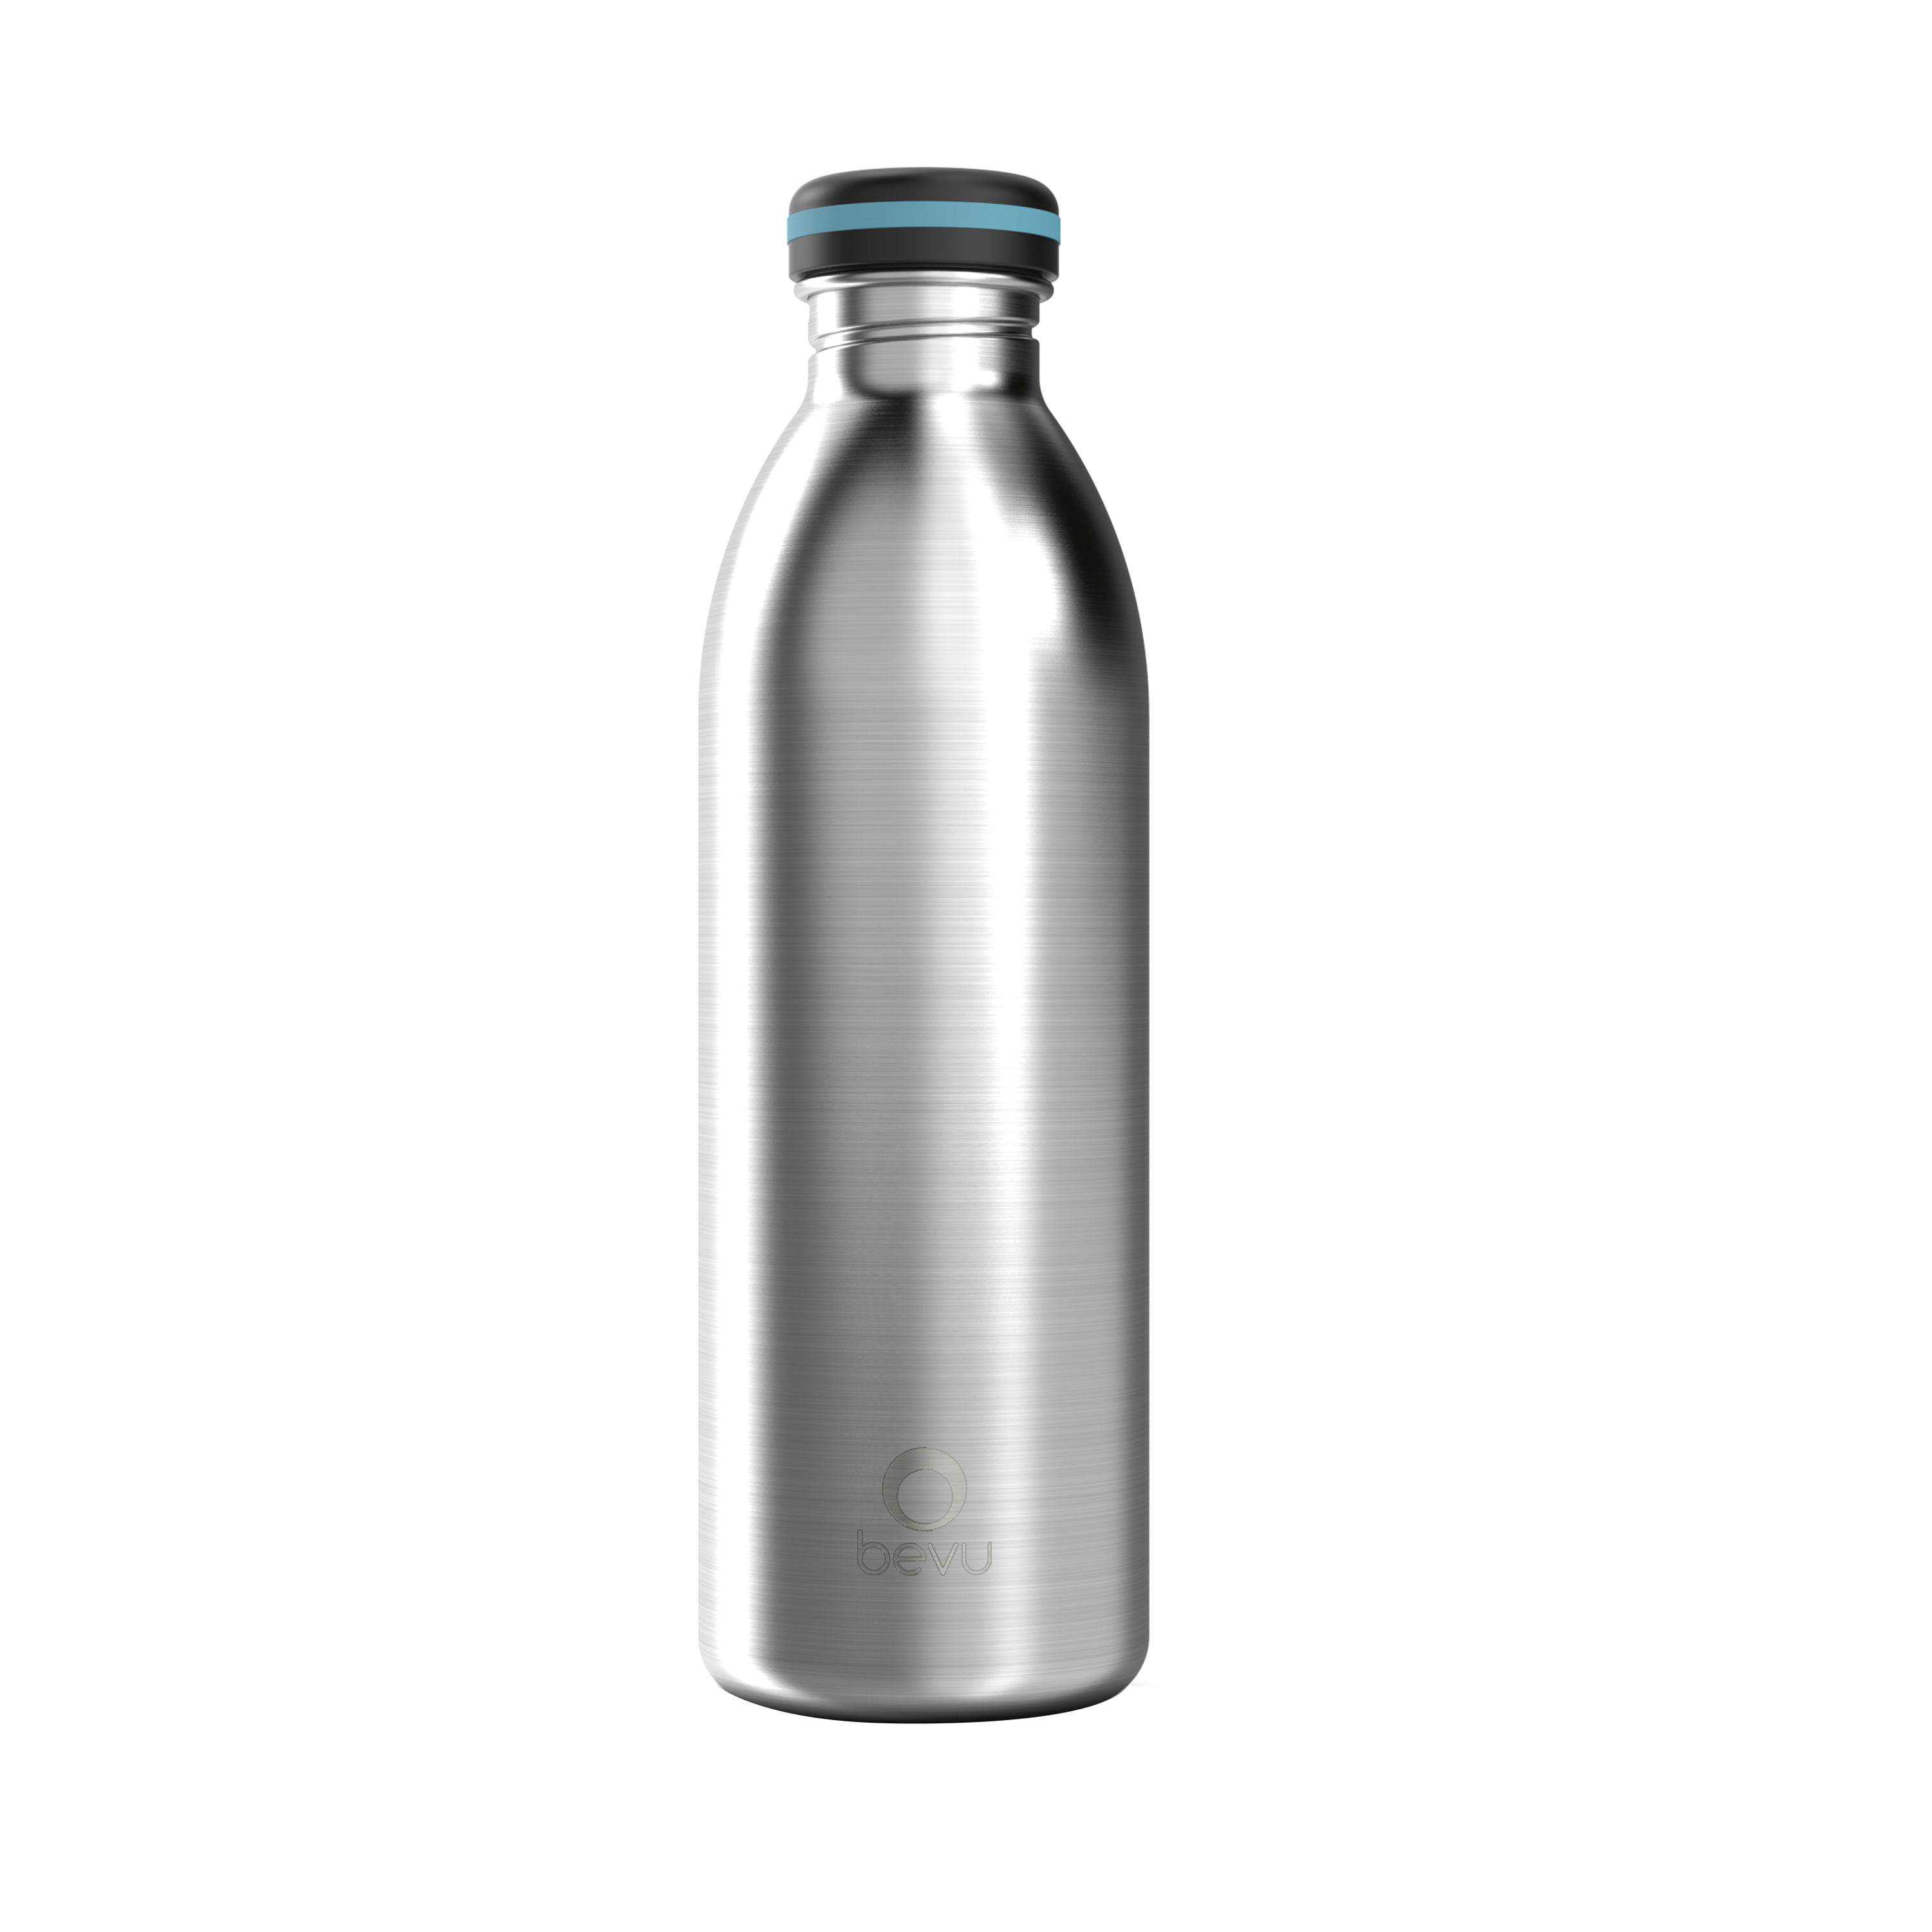 Comprar Botella Para Agua Bevu Reutilizable De Acero Inoxidable